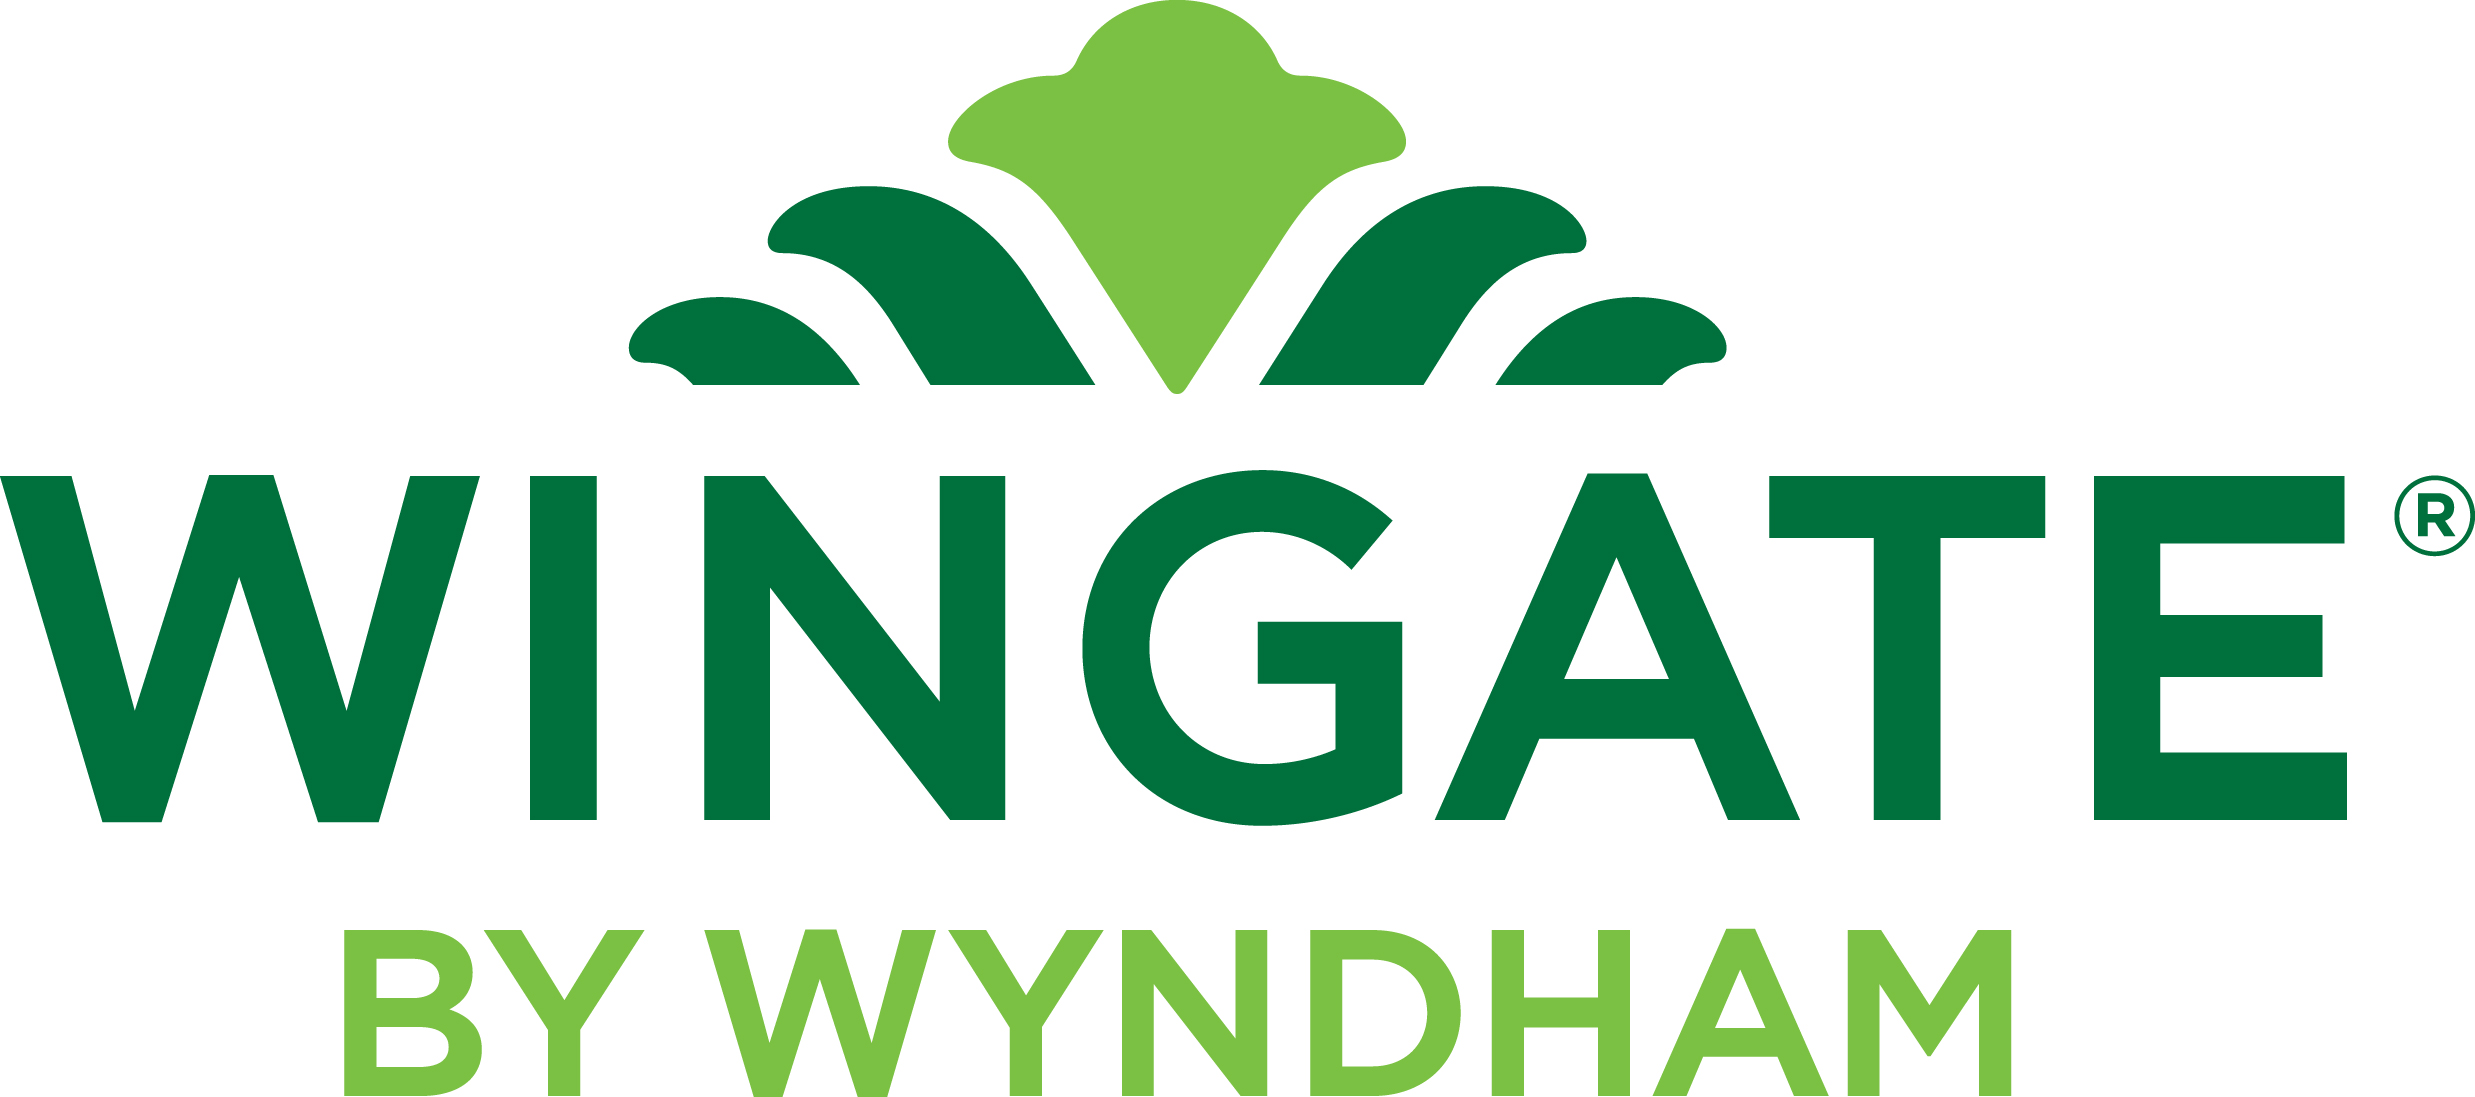 Wingate by Wyndham Brand Logo (Full Color).jpg